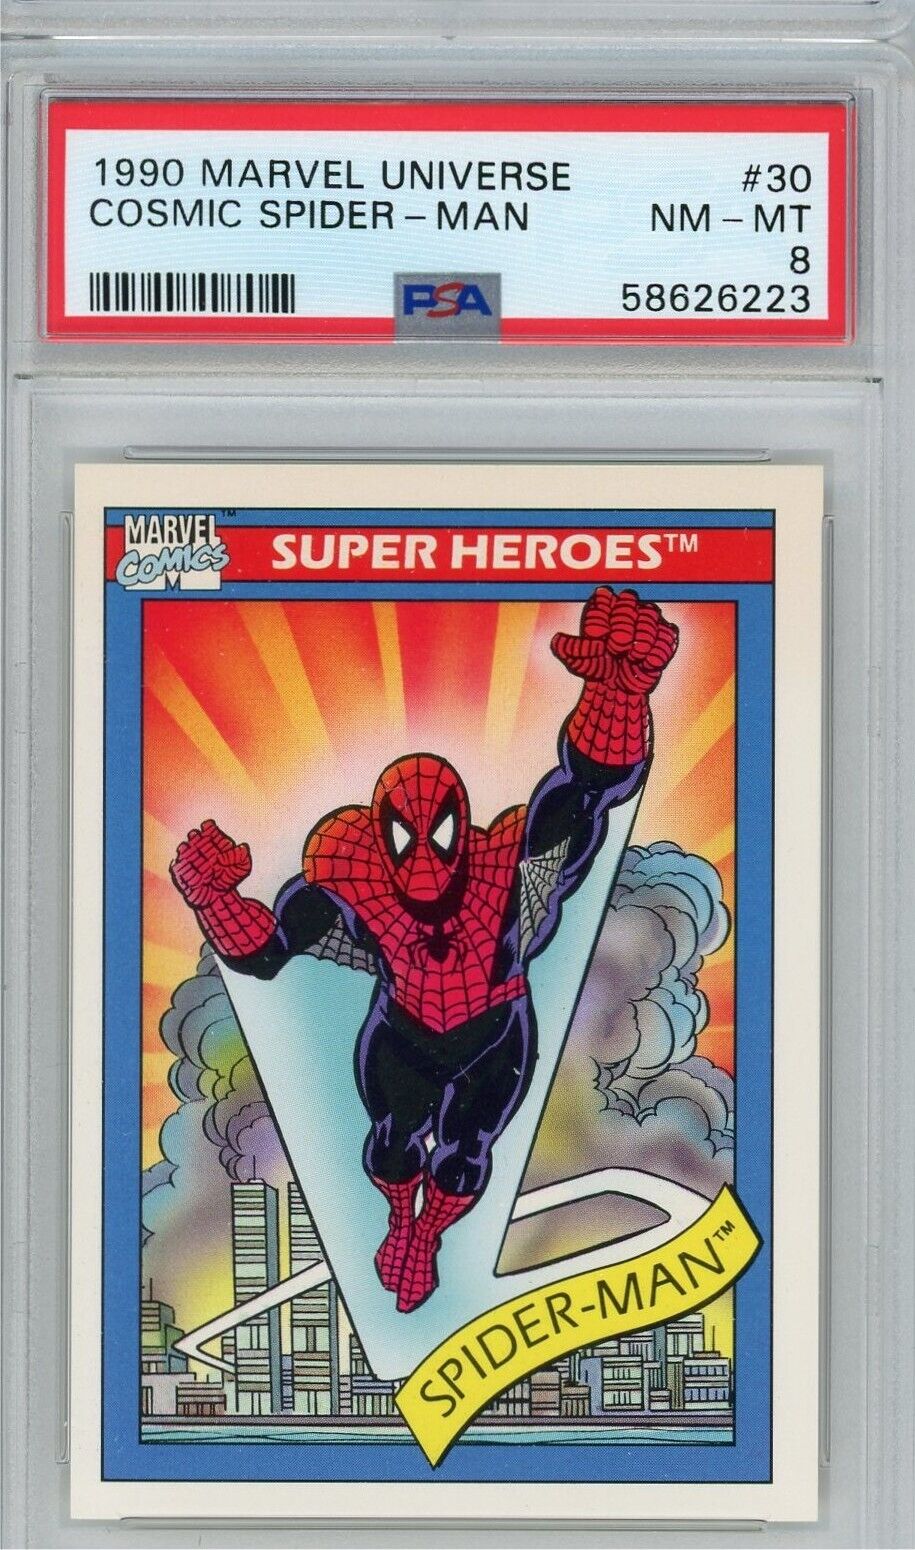 1990 Marvel Universe #30 Cosmic Spider-Man PSA 8